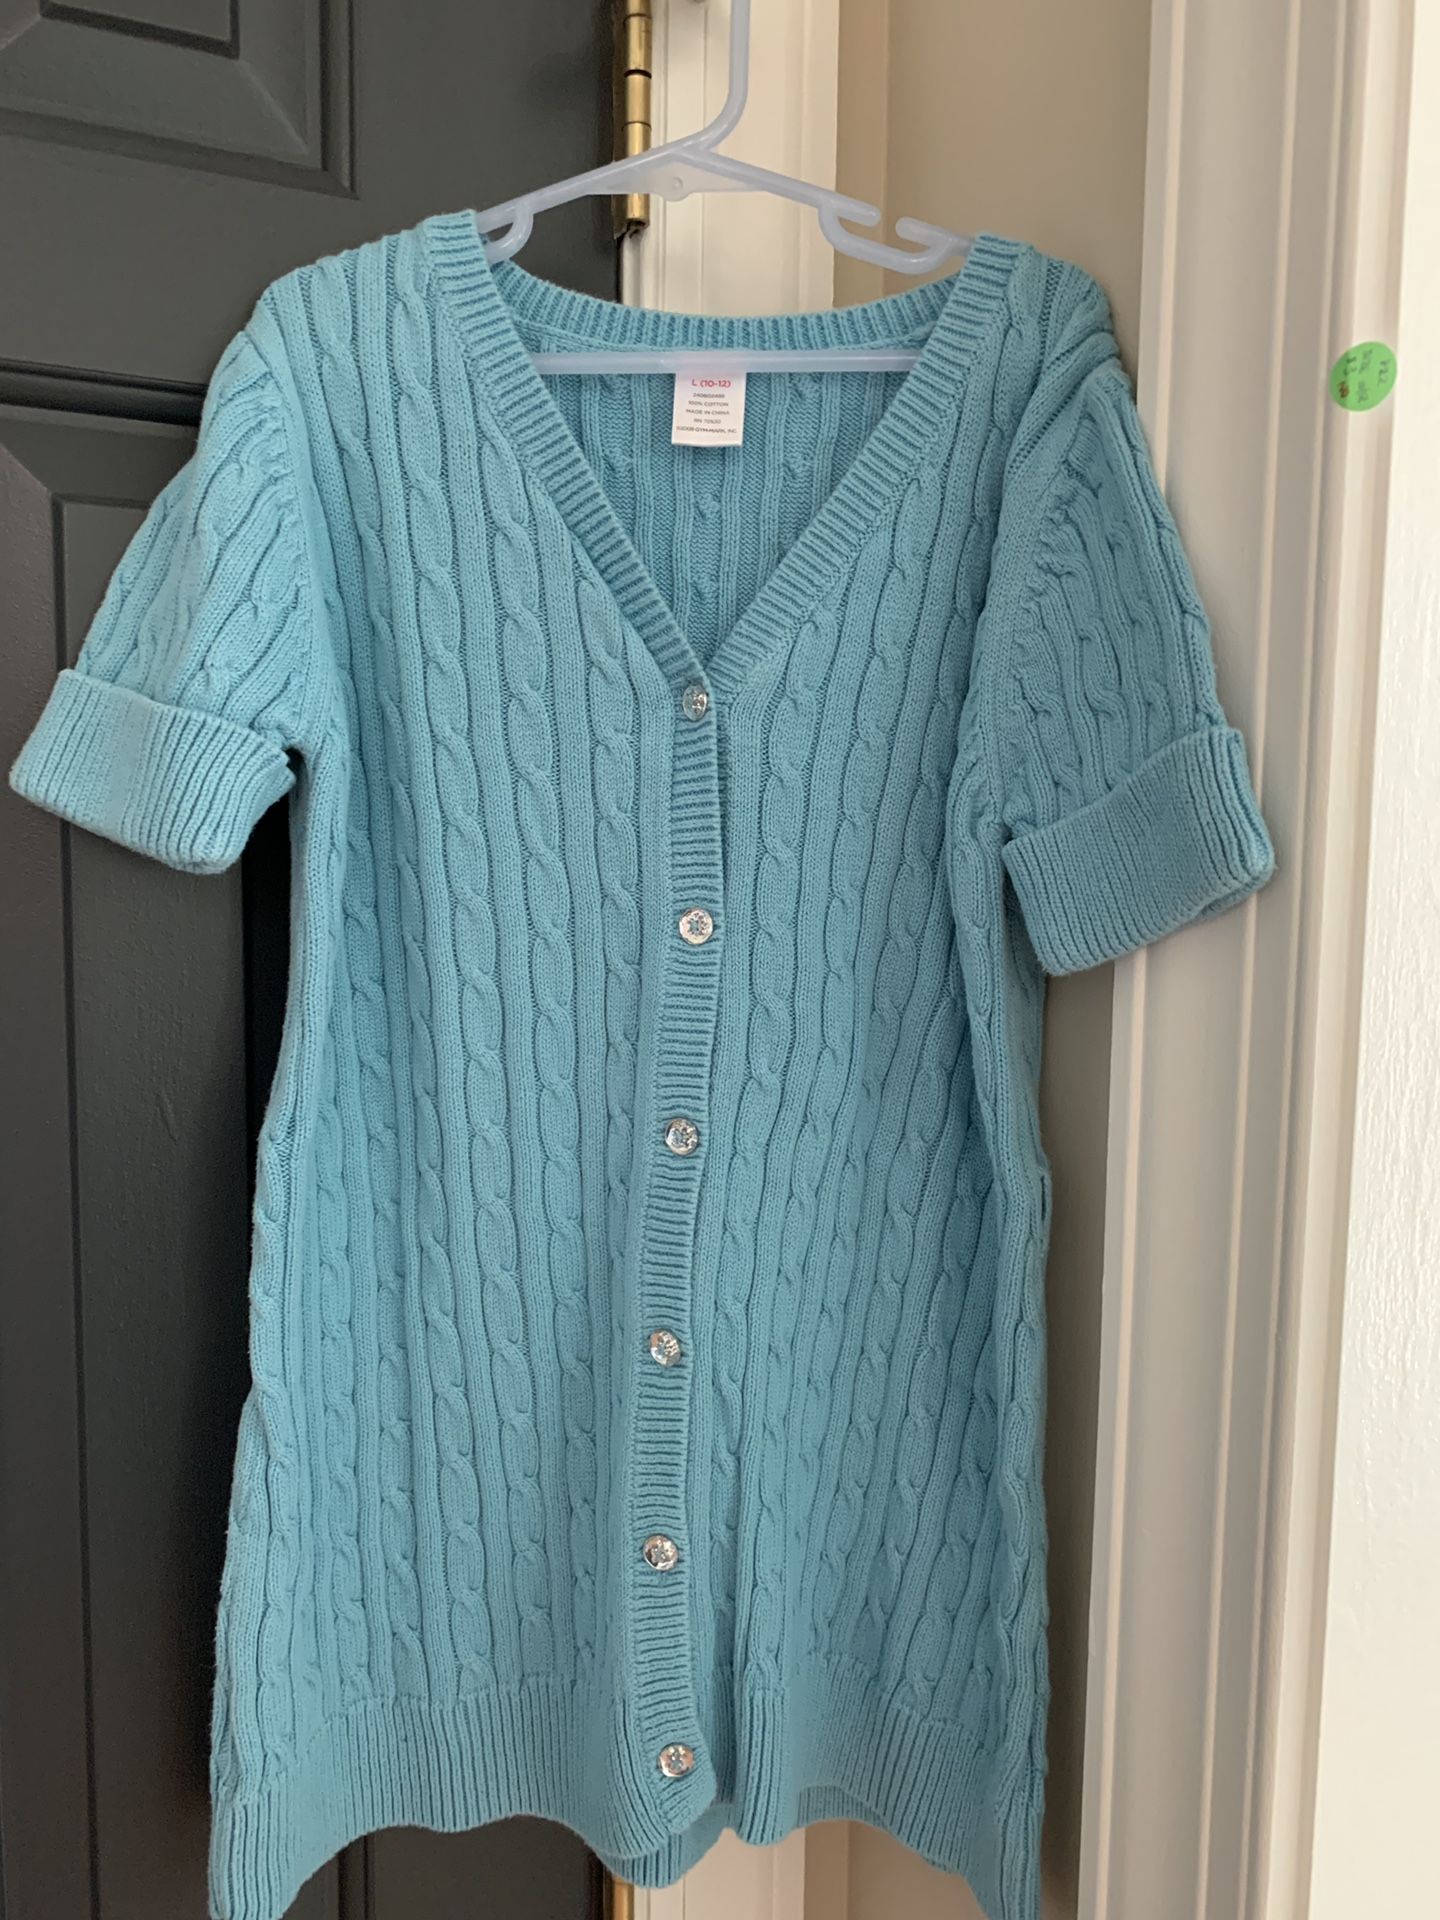 Girl size 10/12 Gymboree blue sweater